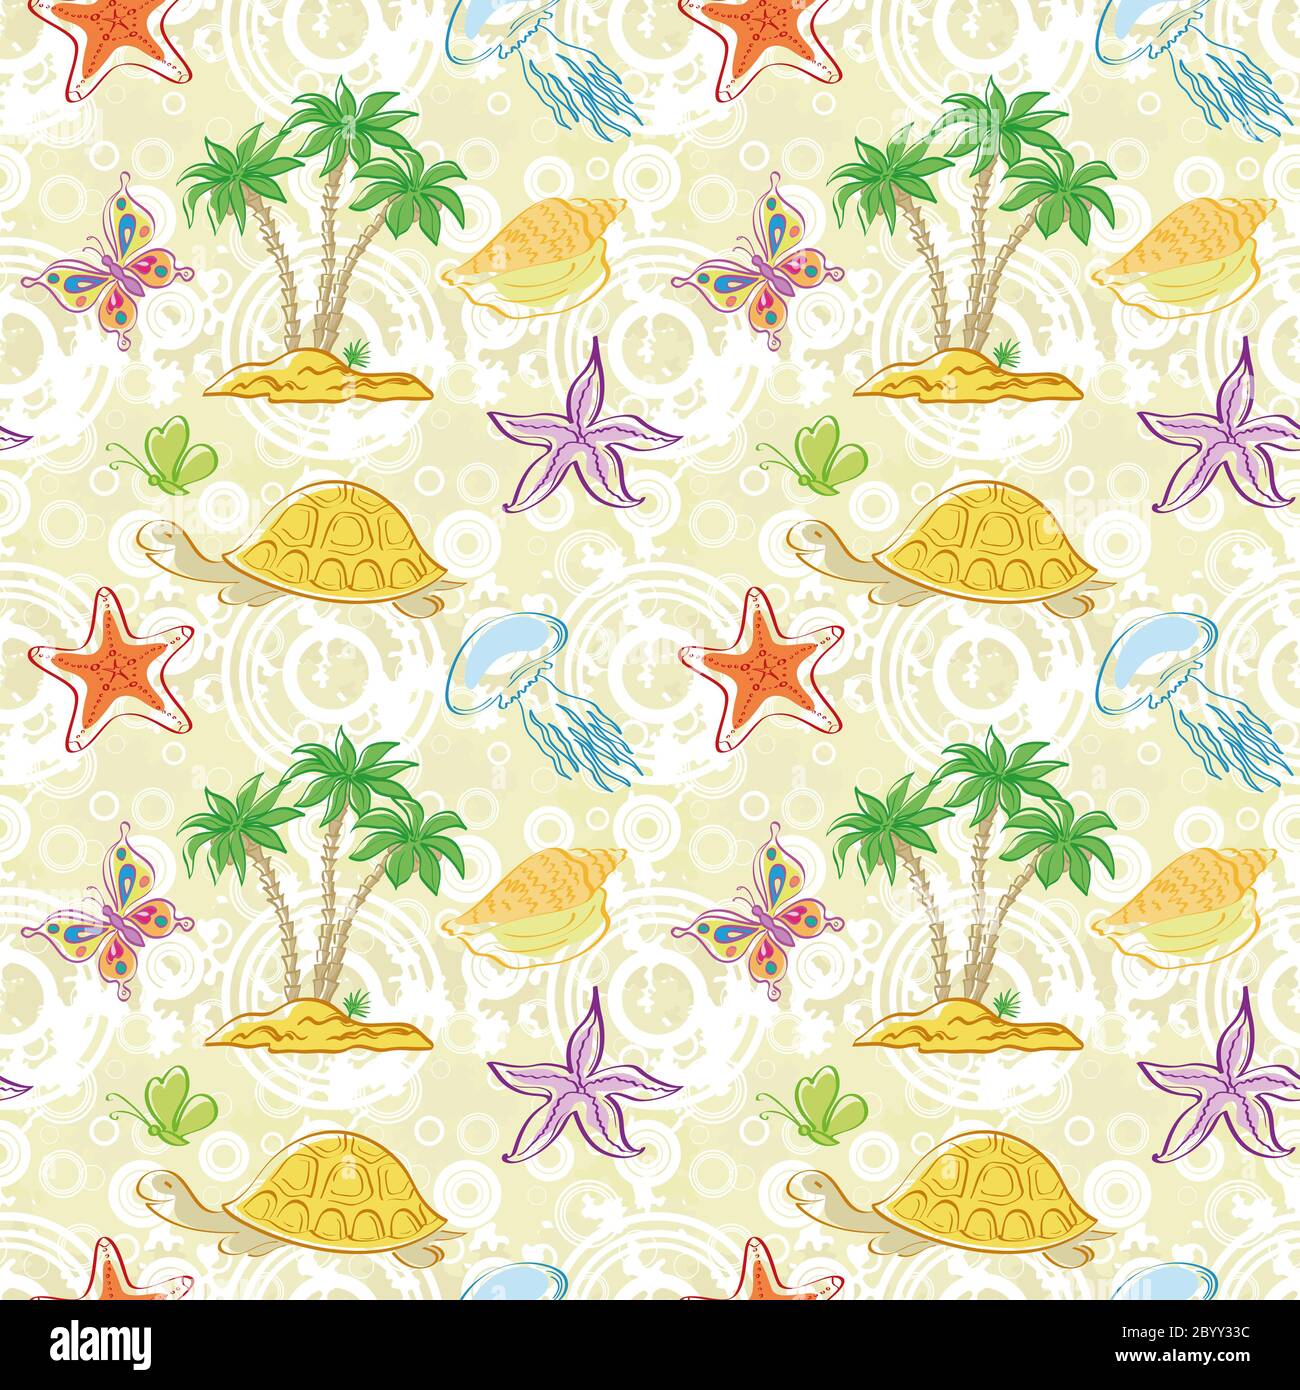 Seamless pattern, palm trees and sea animals Stock Photo